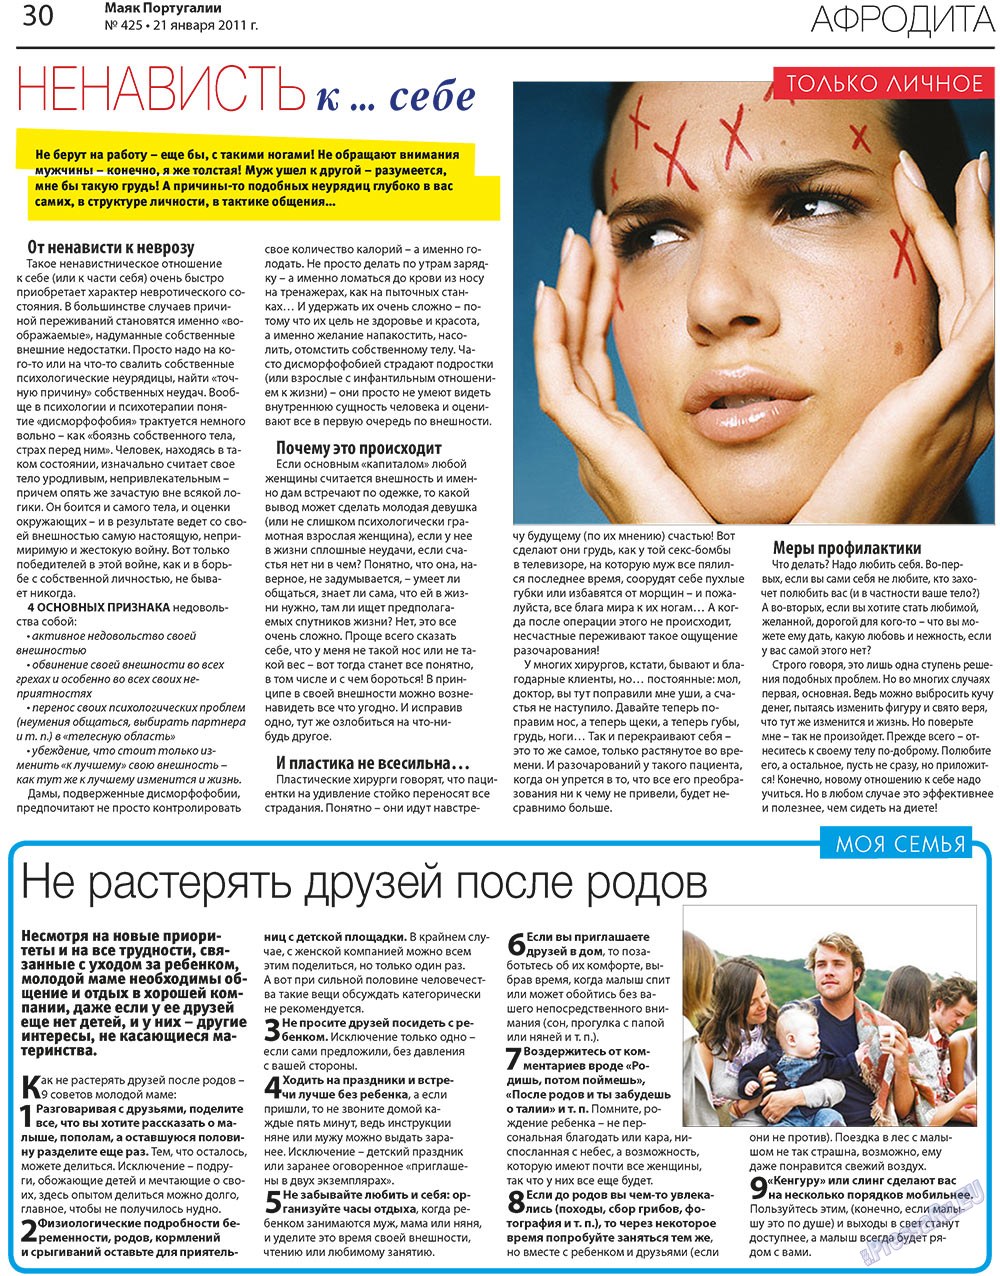 Маяк Португалии, газета. 2011 №425 стр.30